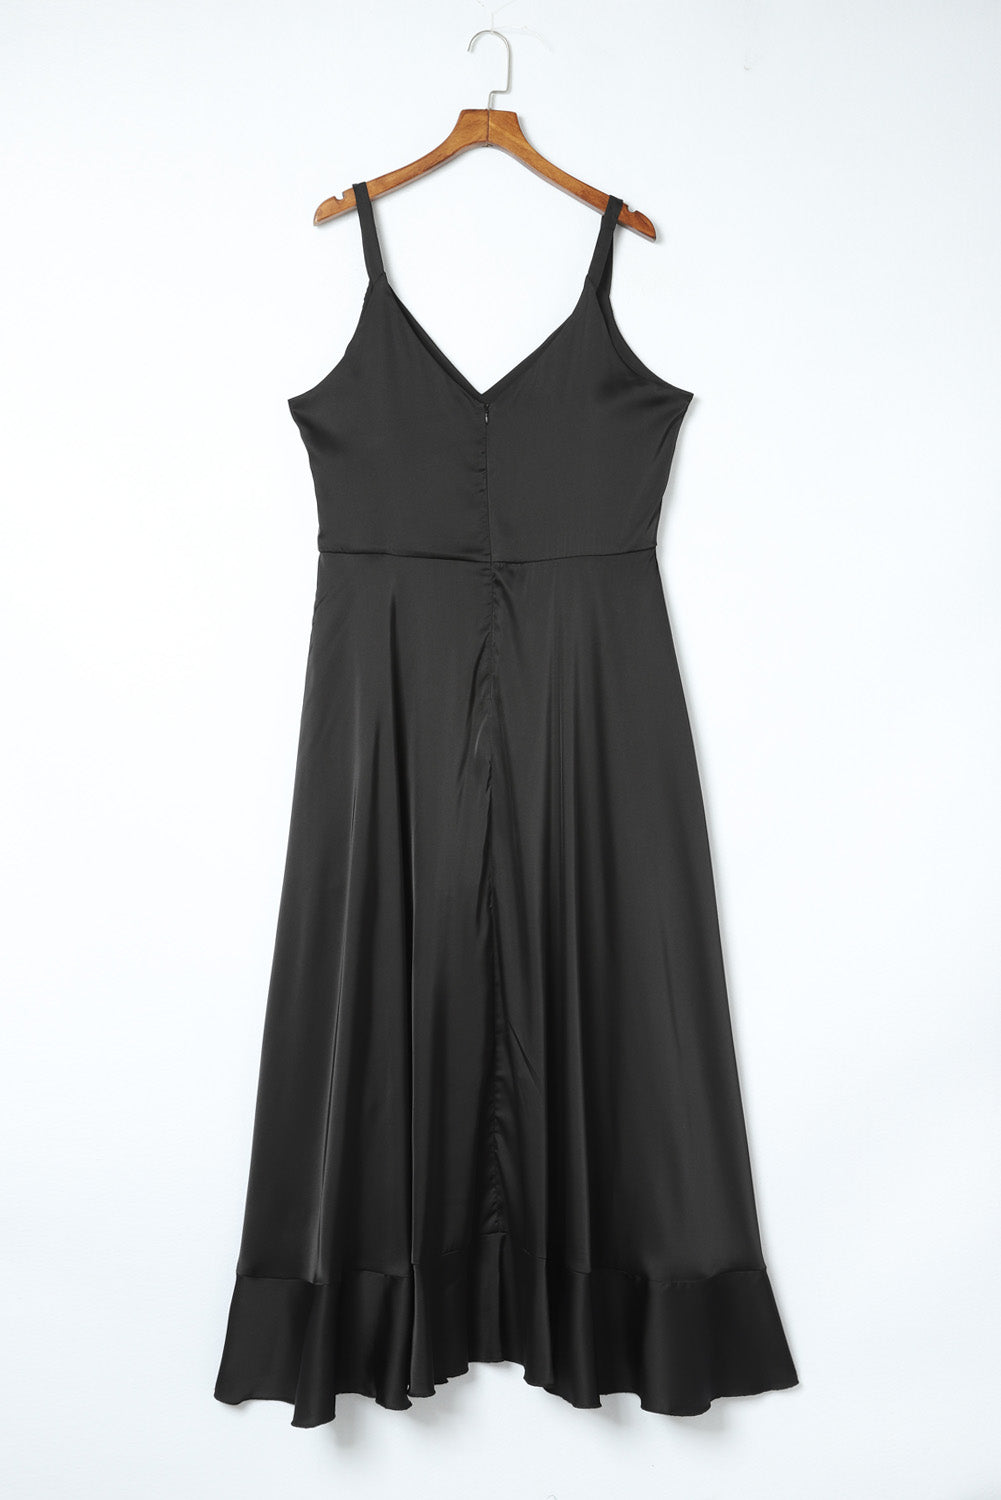 Black Ruffled Thigh High Slit Sleeveless Plus Size Evening Dress